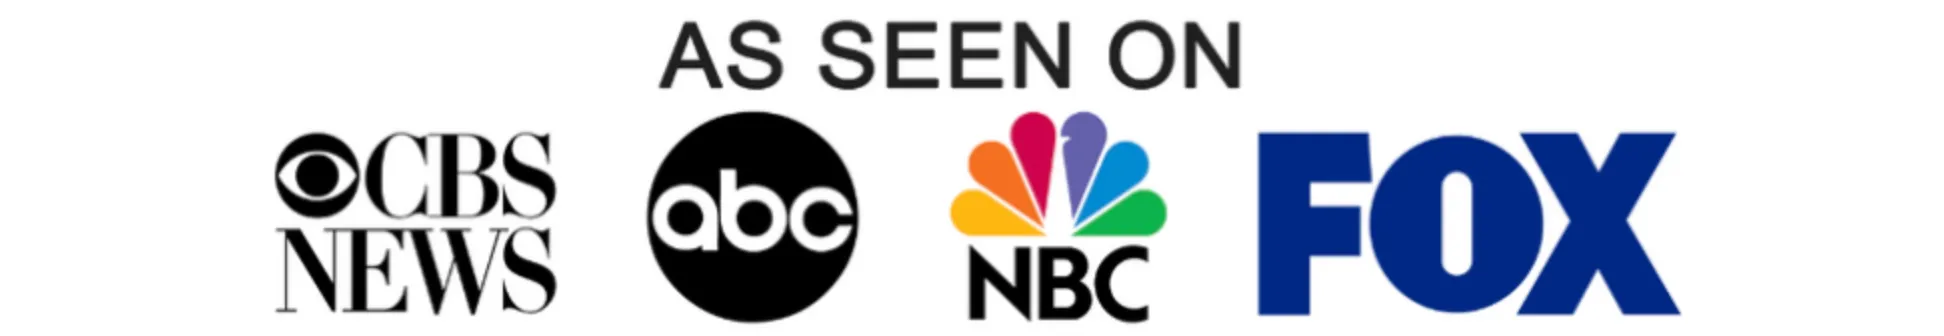 Sky's Travel Club has been seen on CBS News, ABC, NBC, Fox, and News